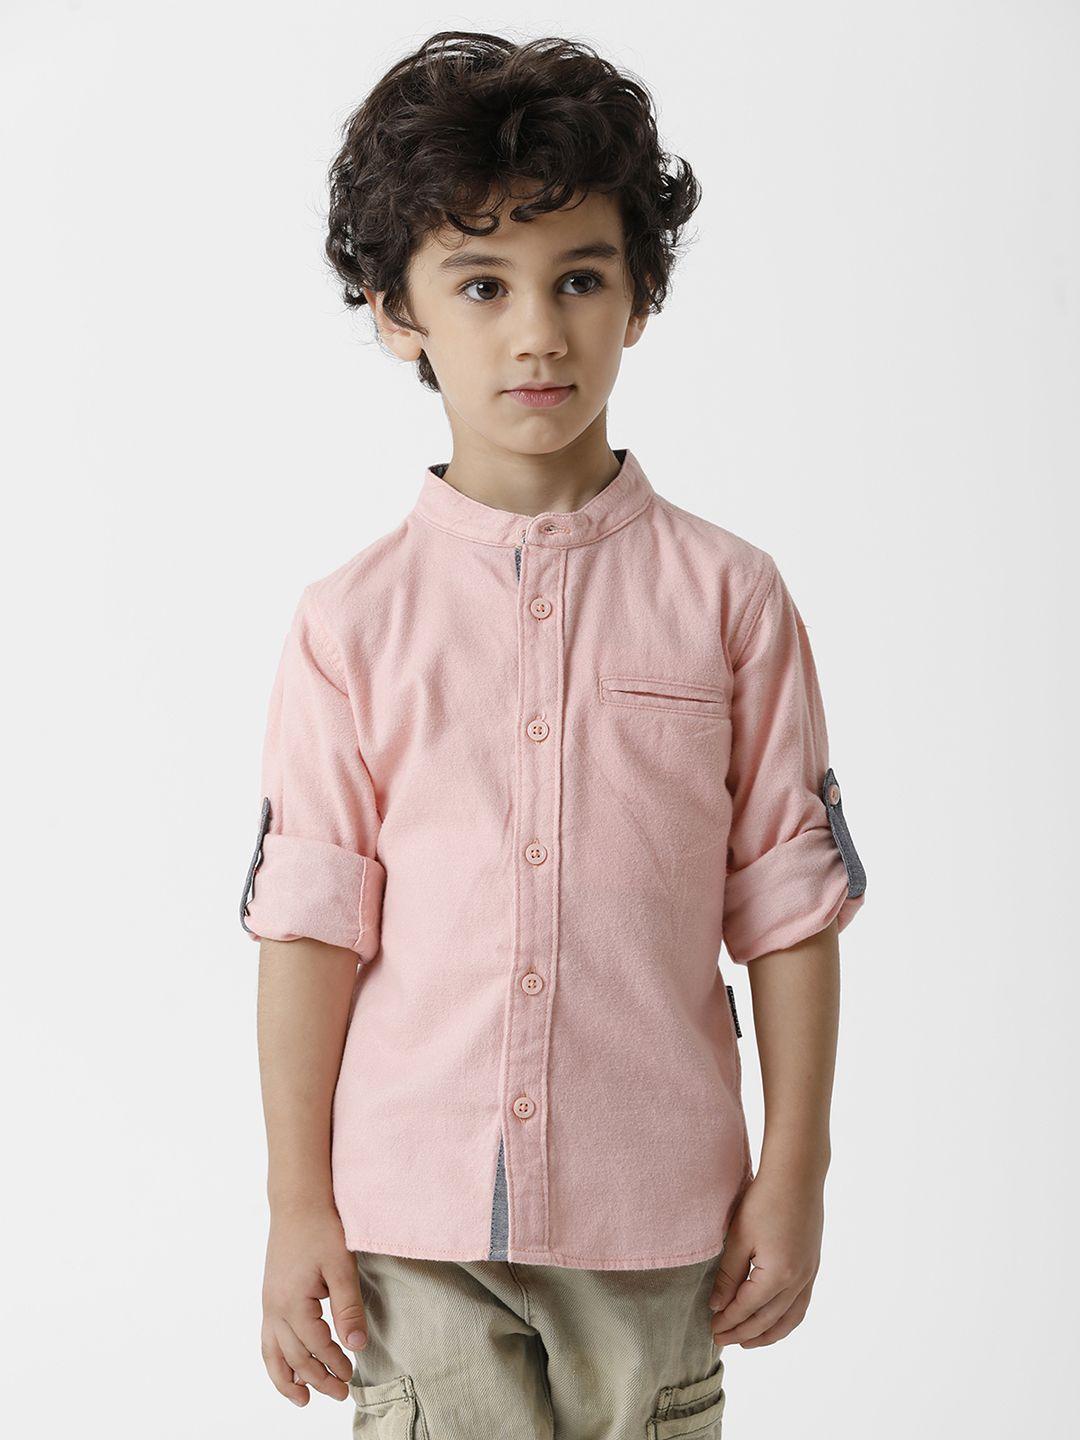 kate & oscar boys pink standard pure cotton casual shirt